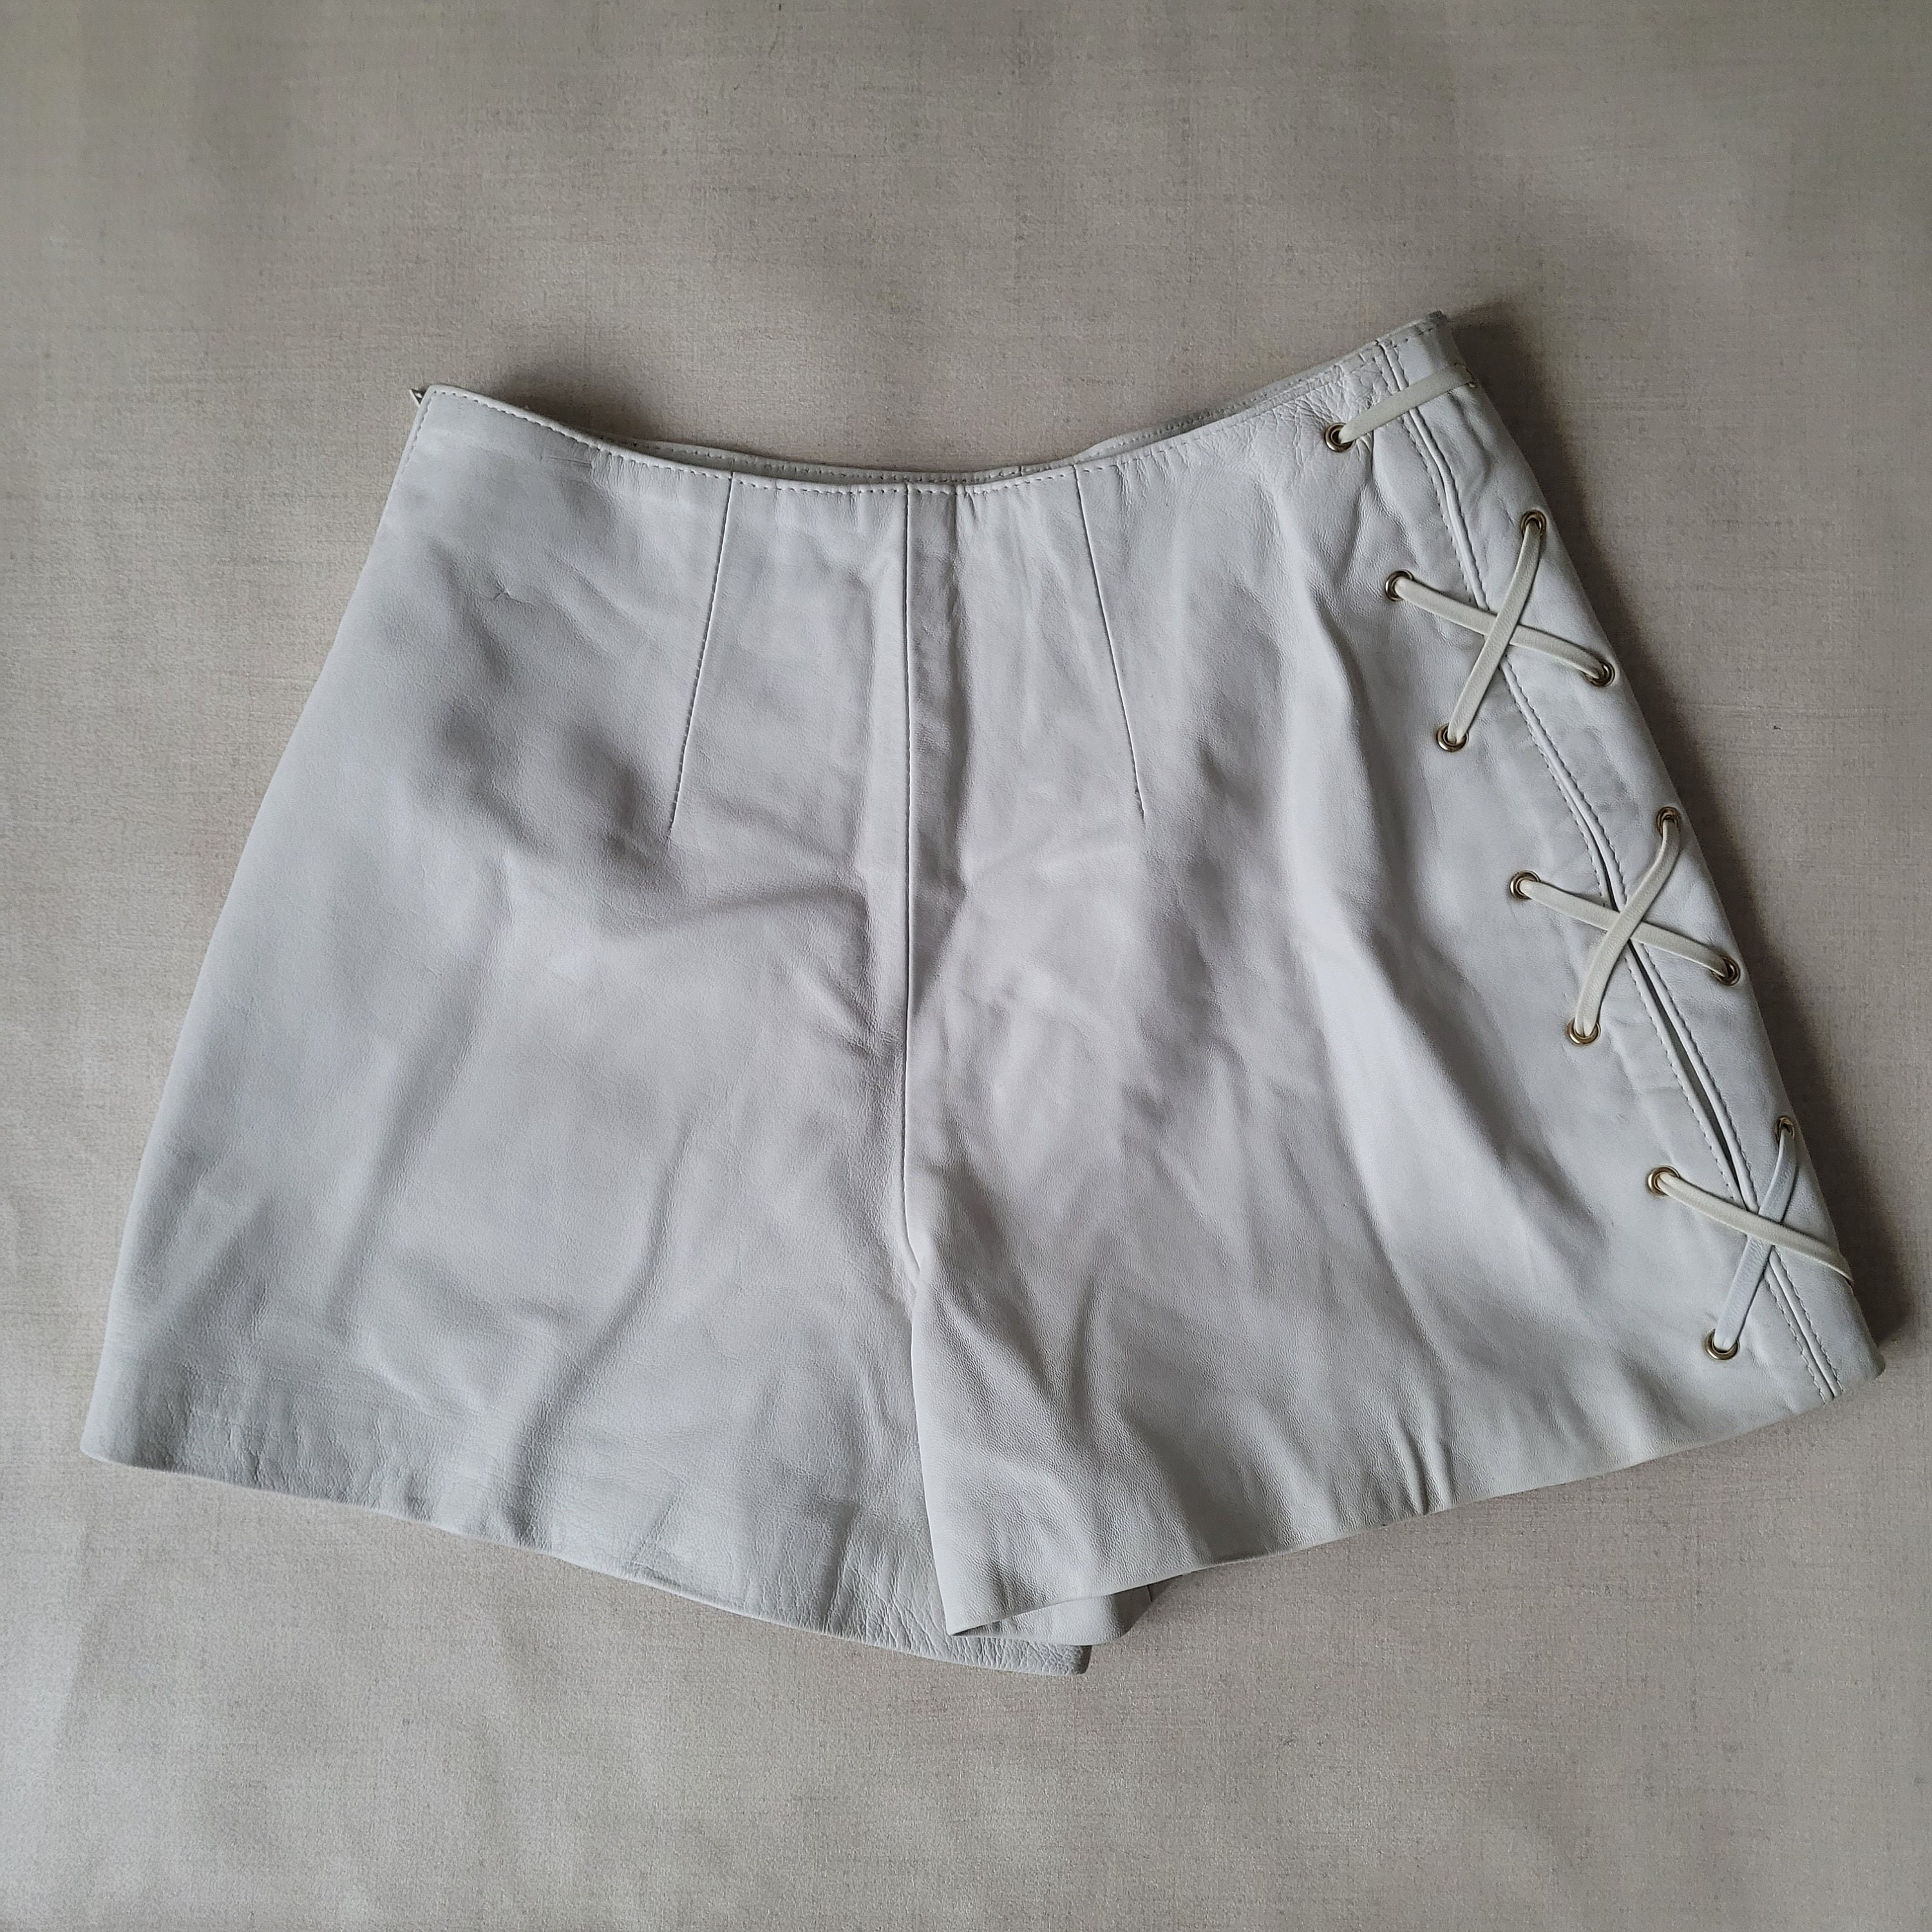 White Lace bike Shorts